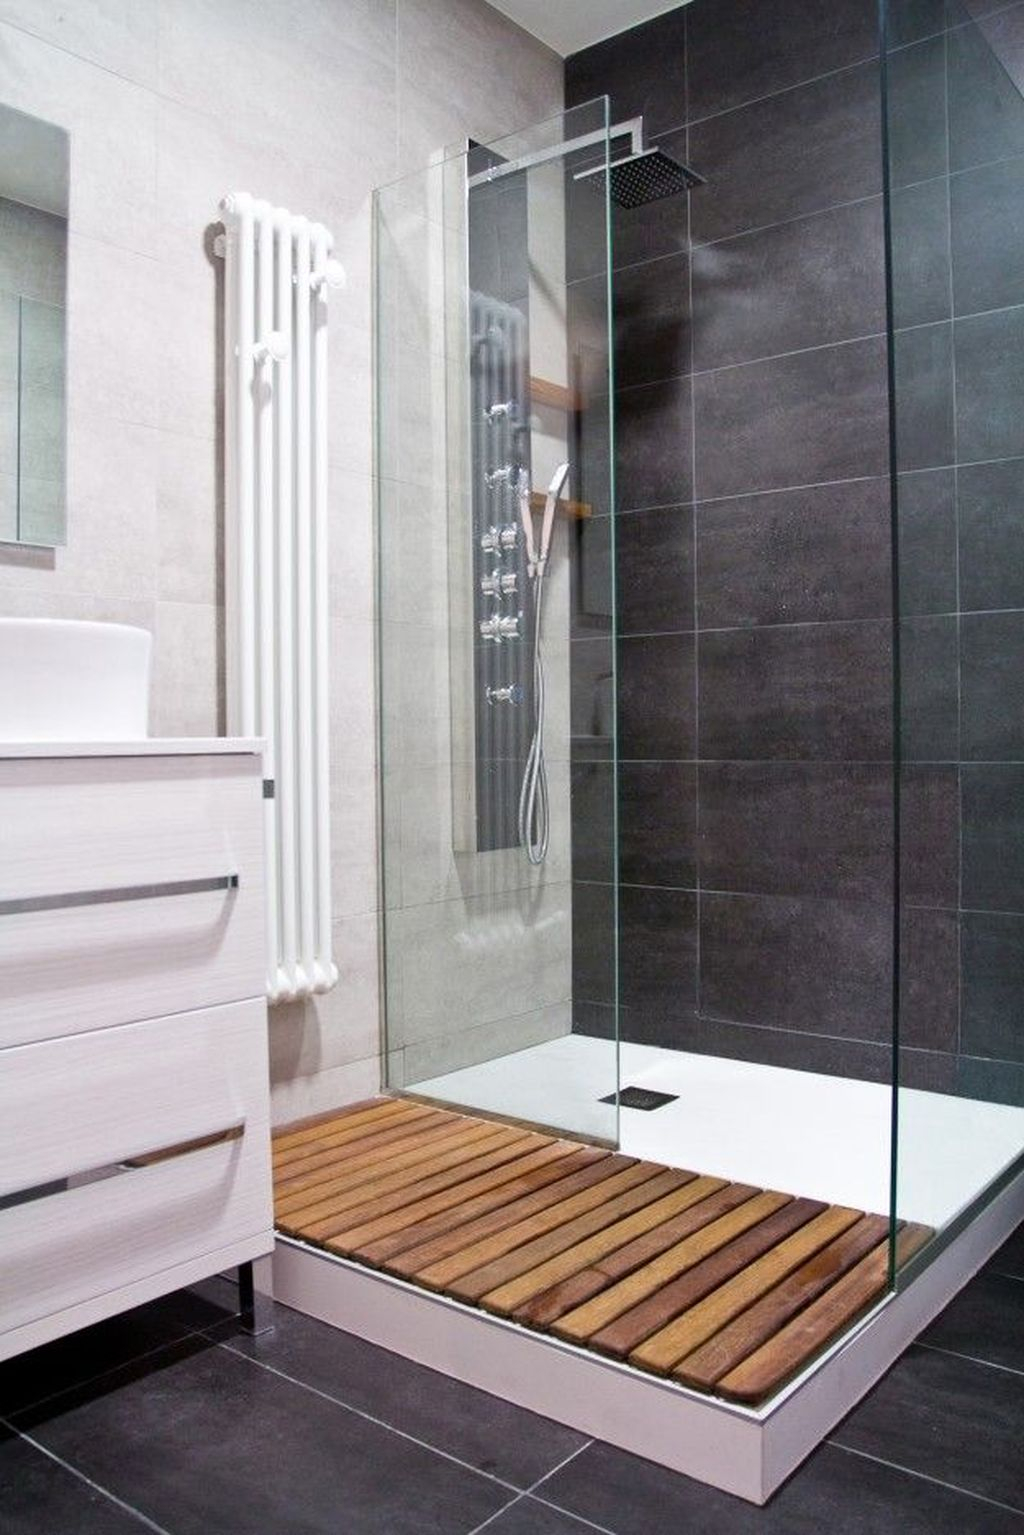 Marvelous Wooden Shower Floor Tiles Designs Ideas For Bathroom Remodel 03